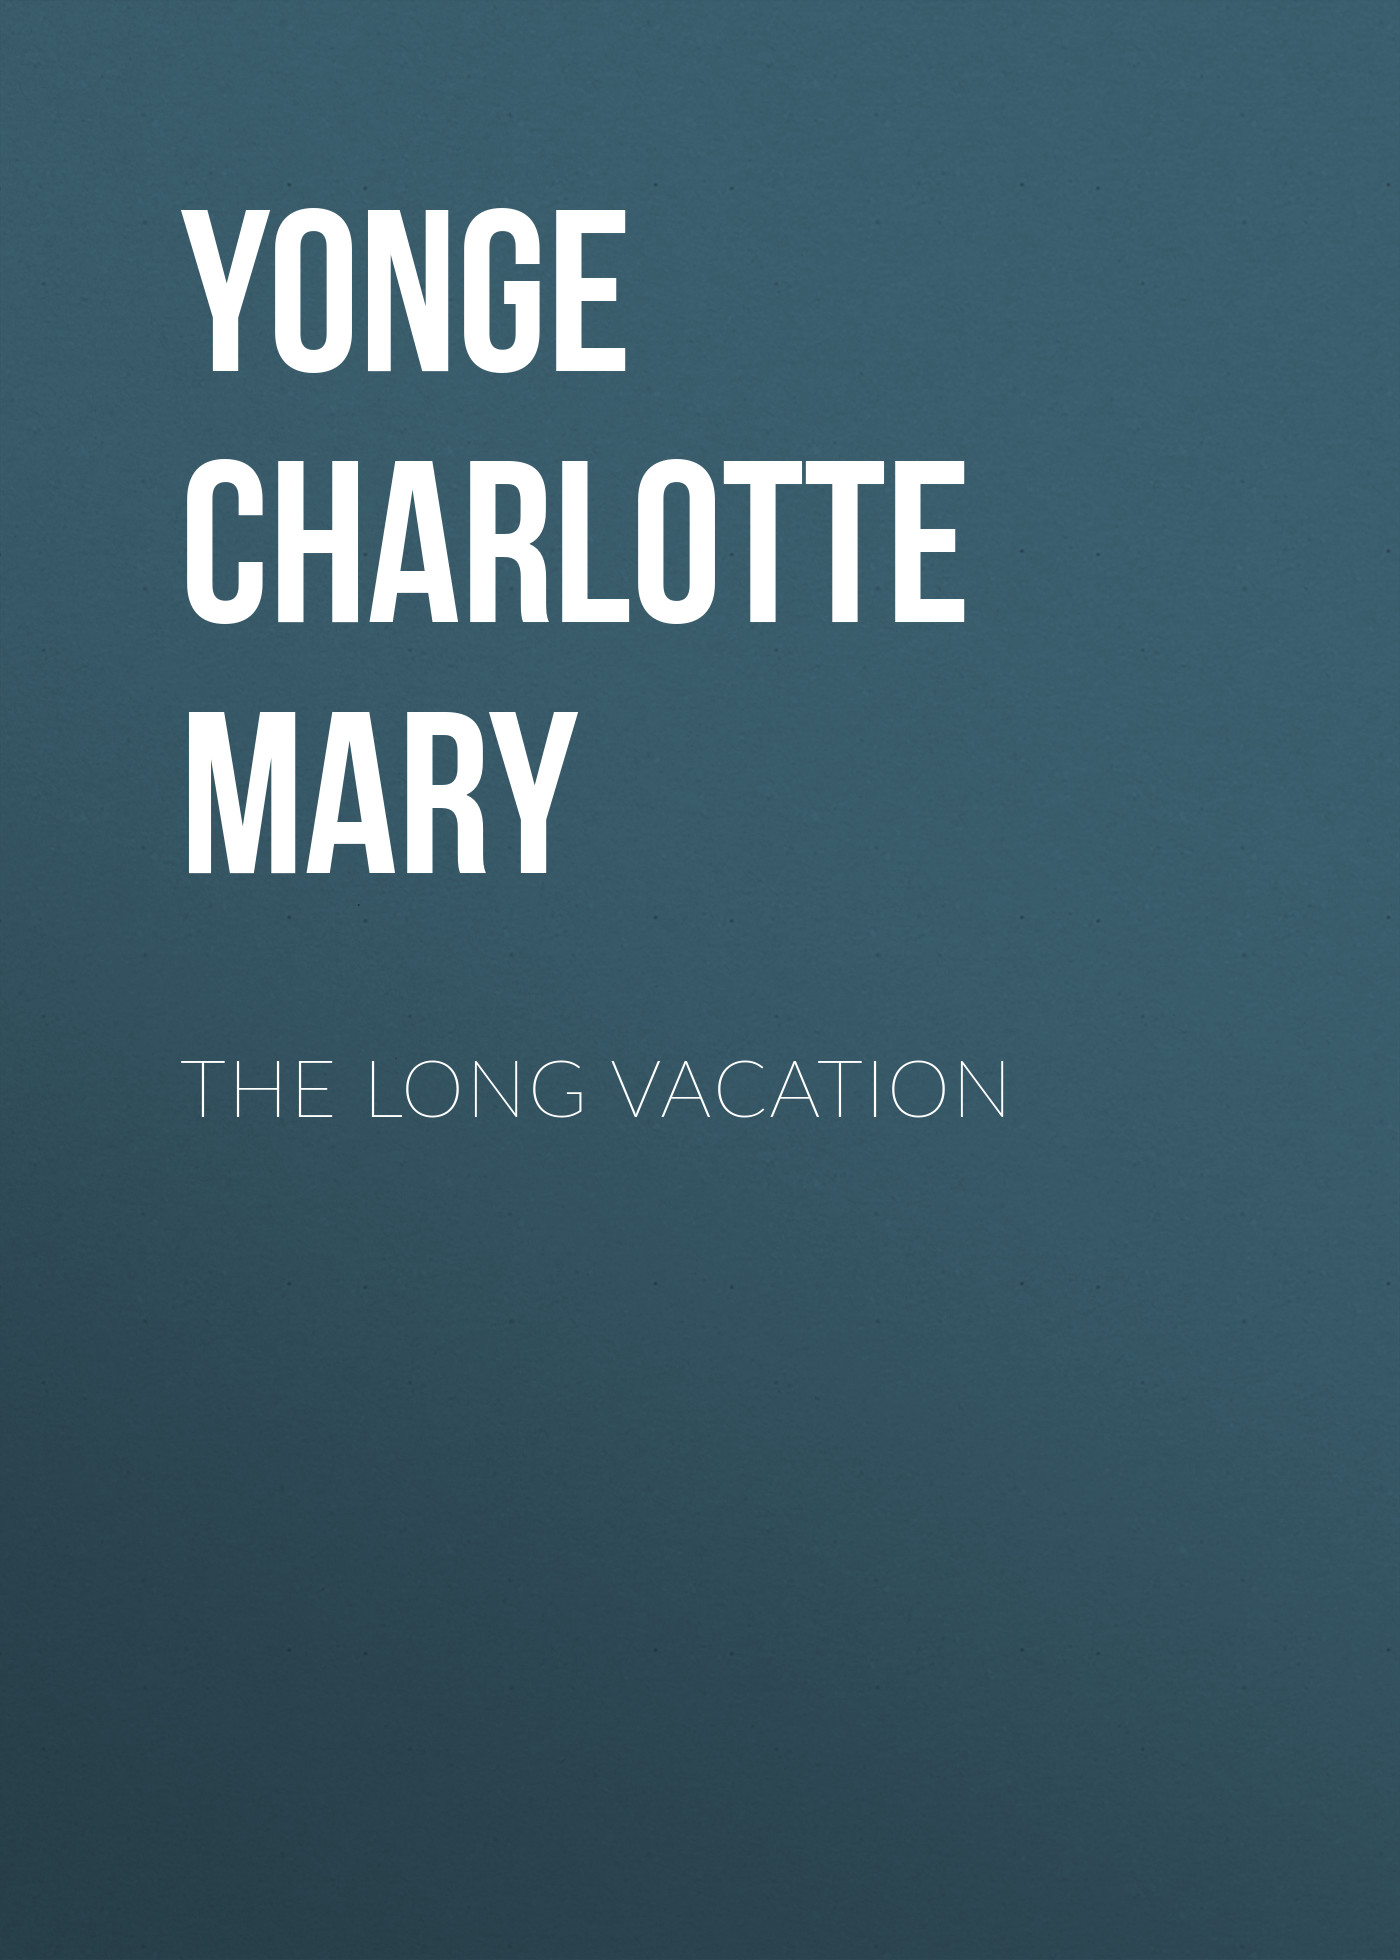 Скачать The Long Vacation - Yonge Charlotte Mary